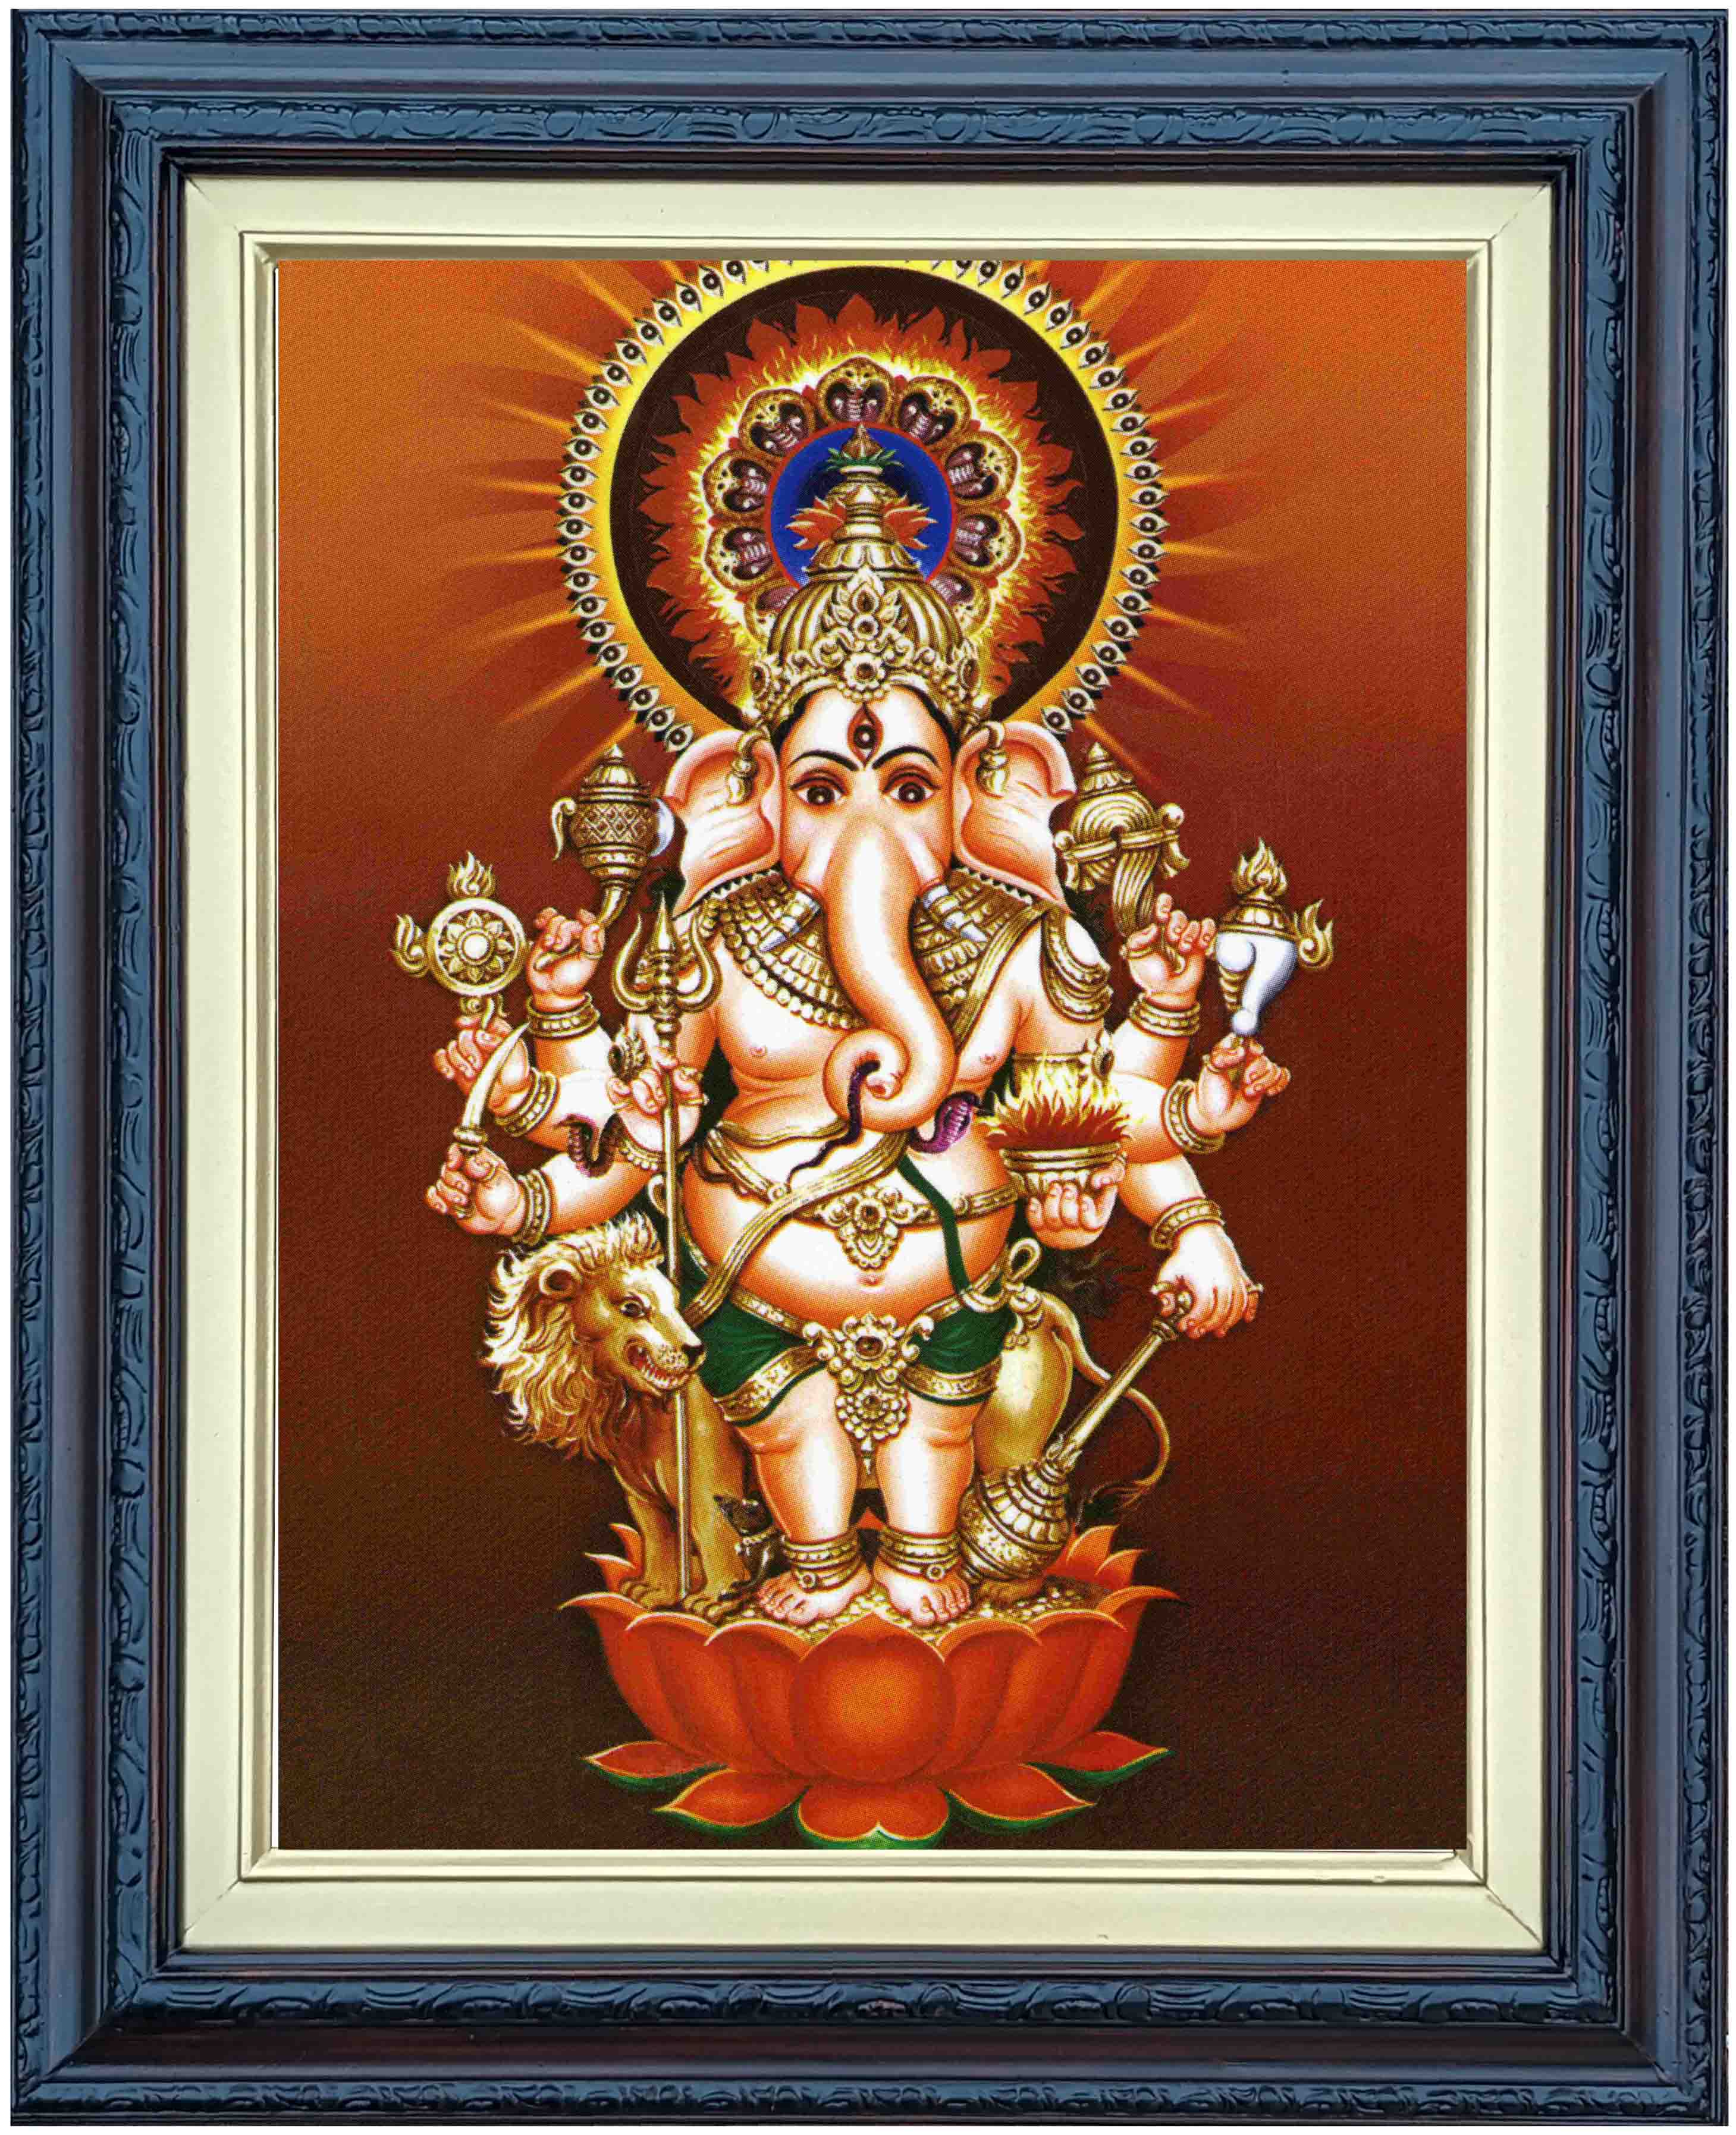 Drsti/Dhisti Ganesha Painting in Authentic Wood Frame